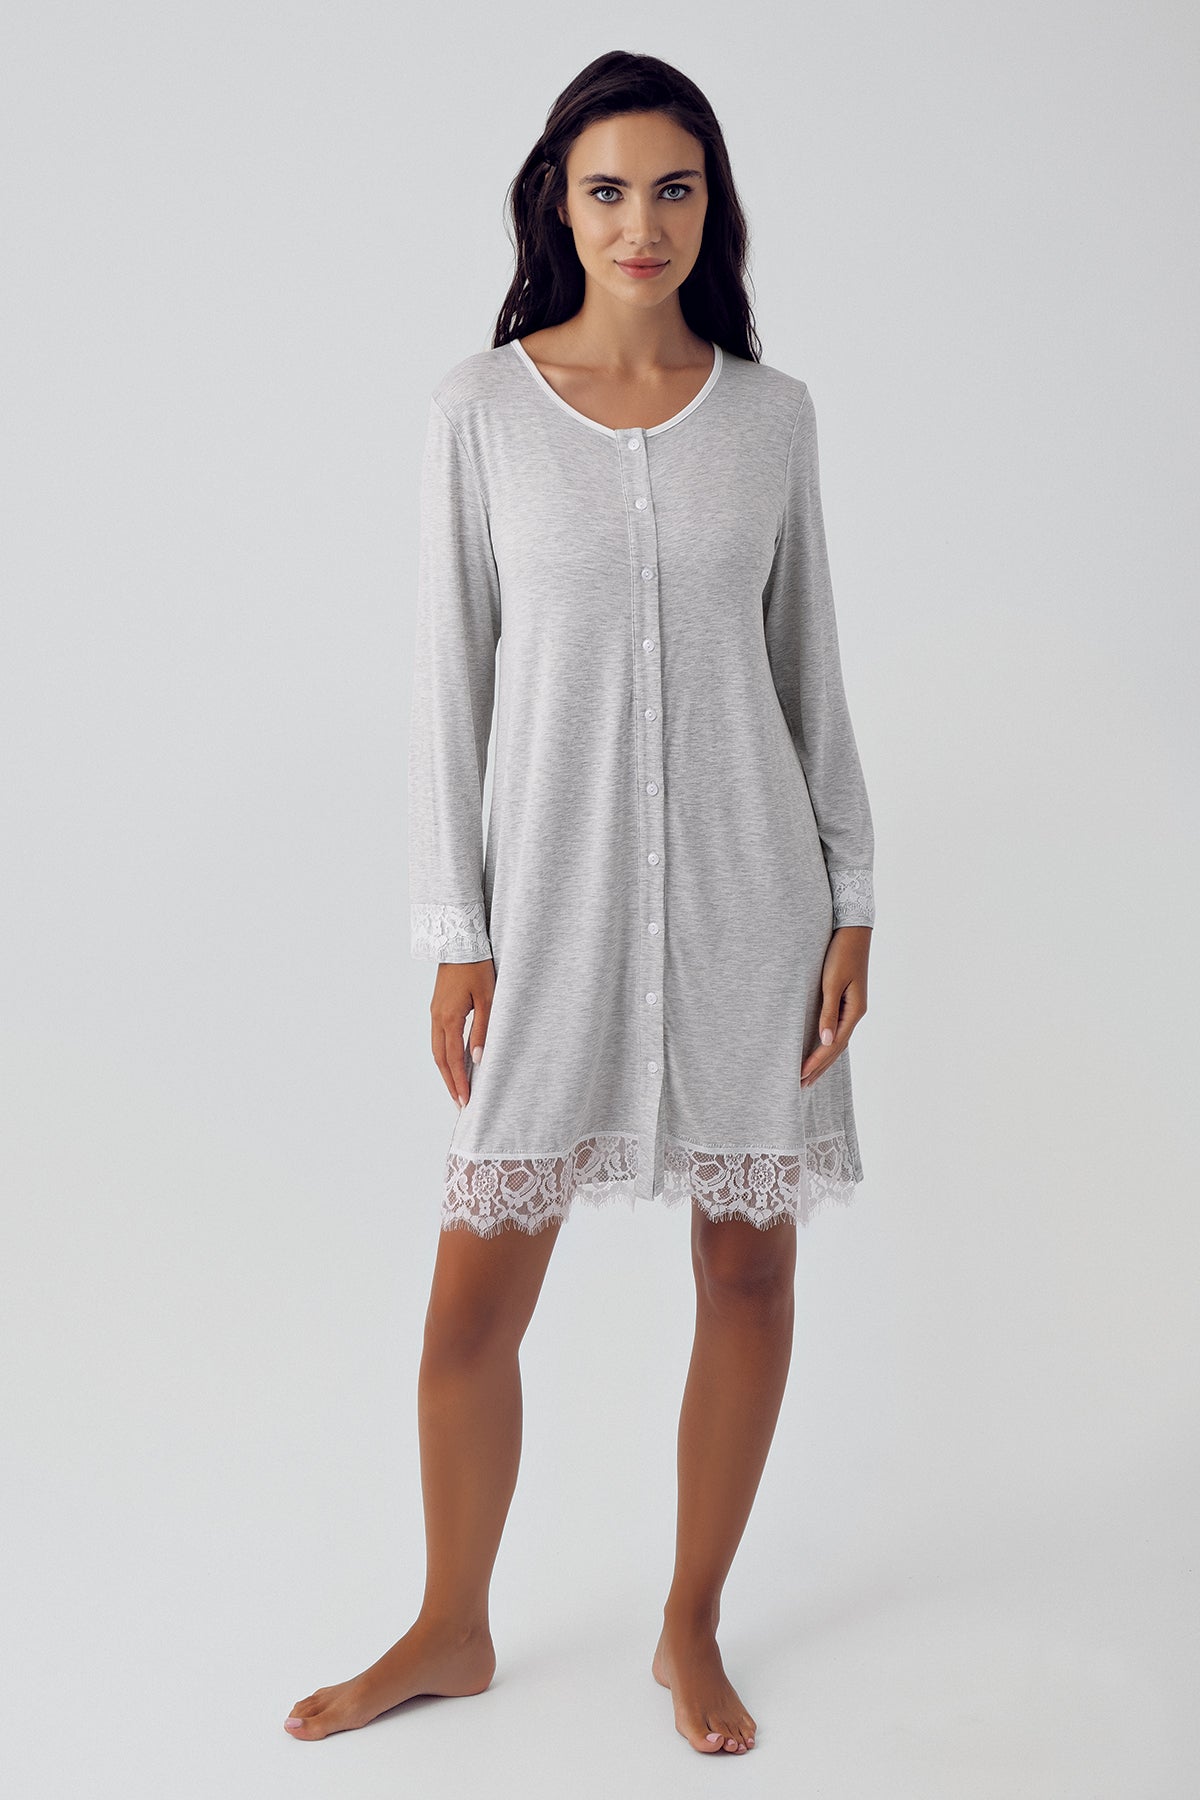 Shopymommy 15103 Melange Lace Maternity & Nursing Nightgown Grey